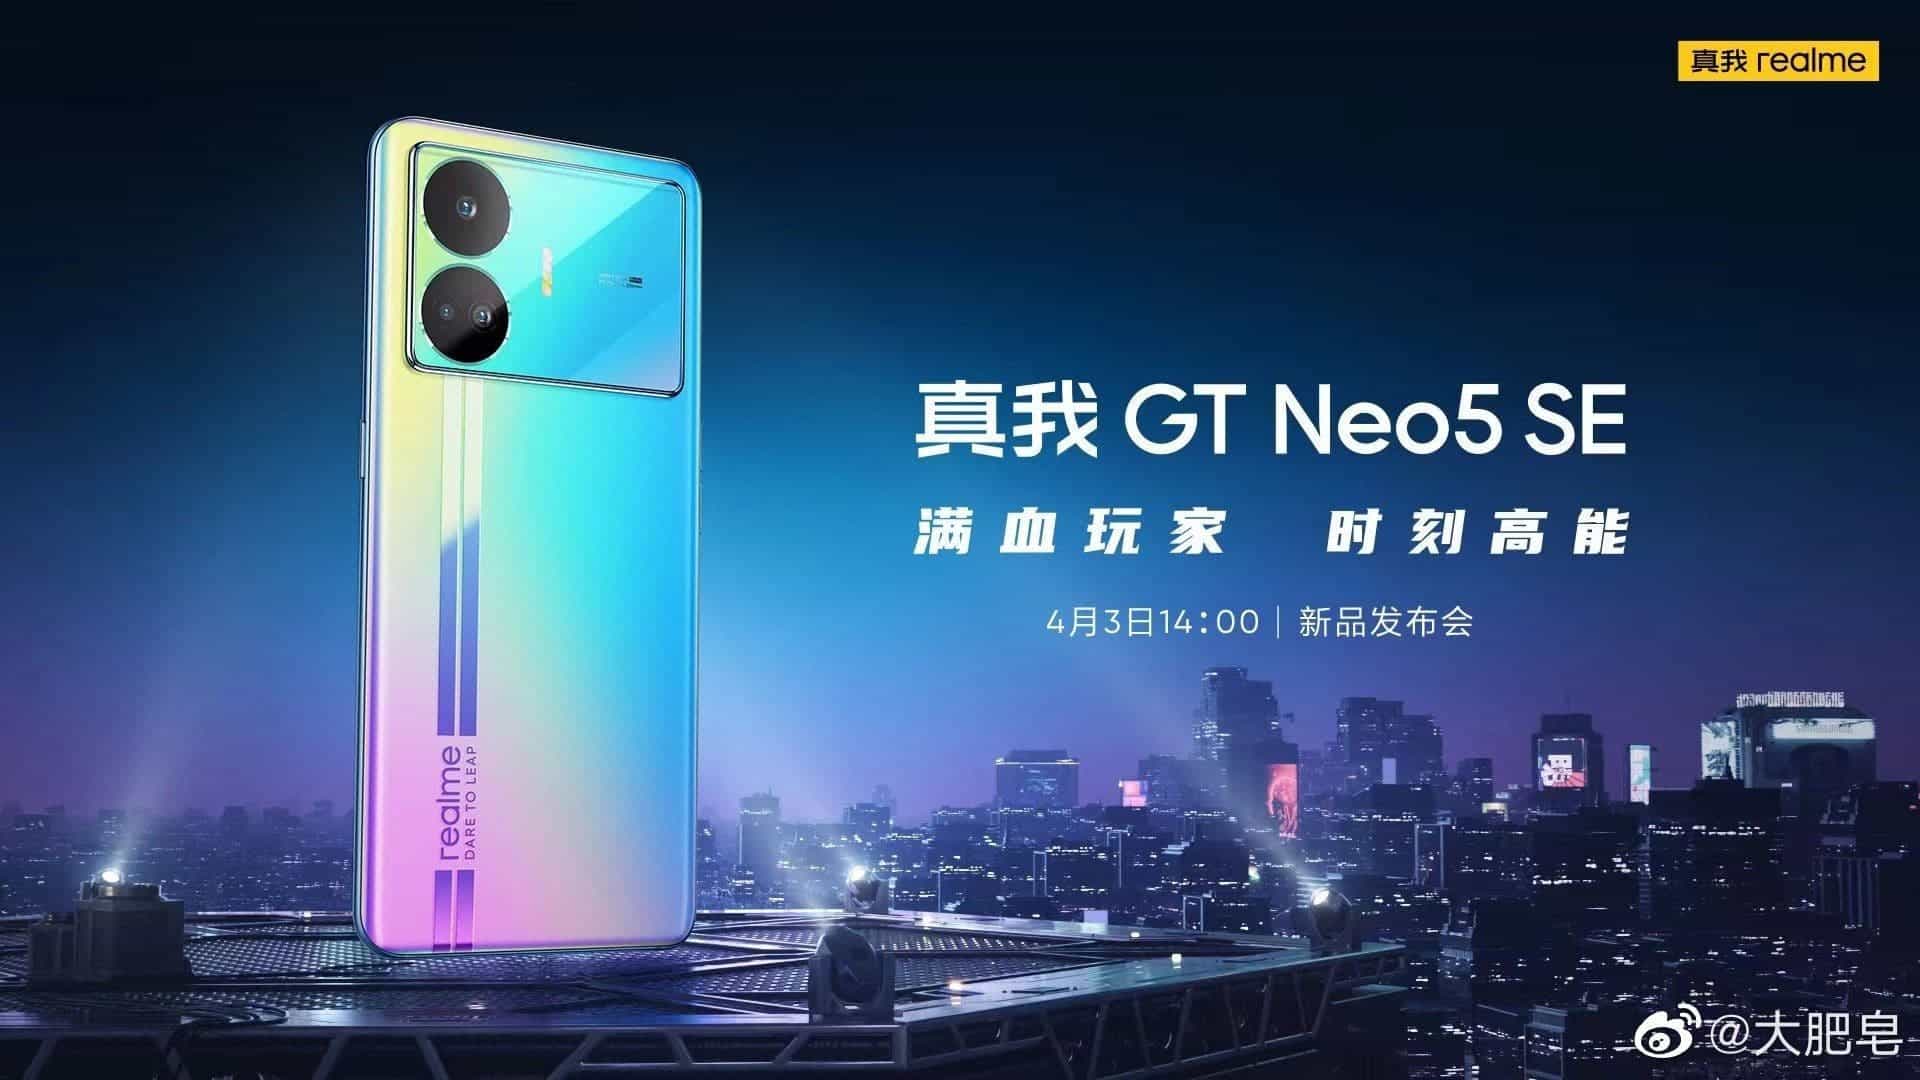 Realme GT Neo5 SE 1TB version on sale for 2599 yuan ($378 